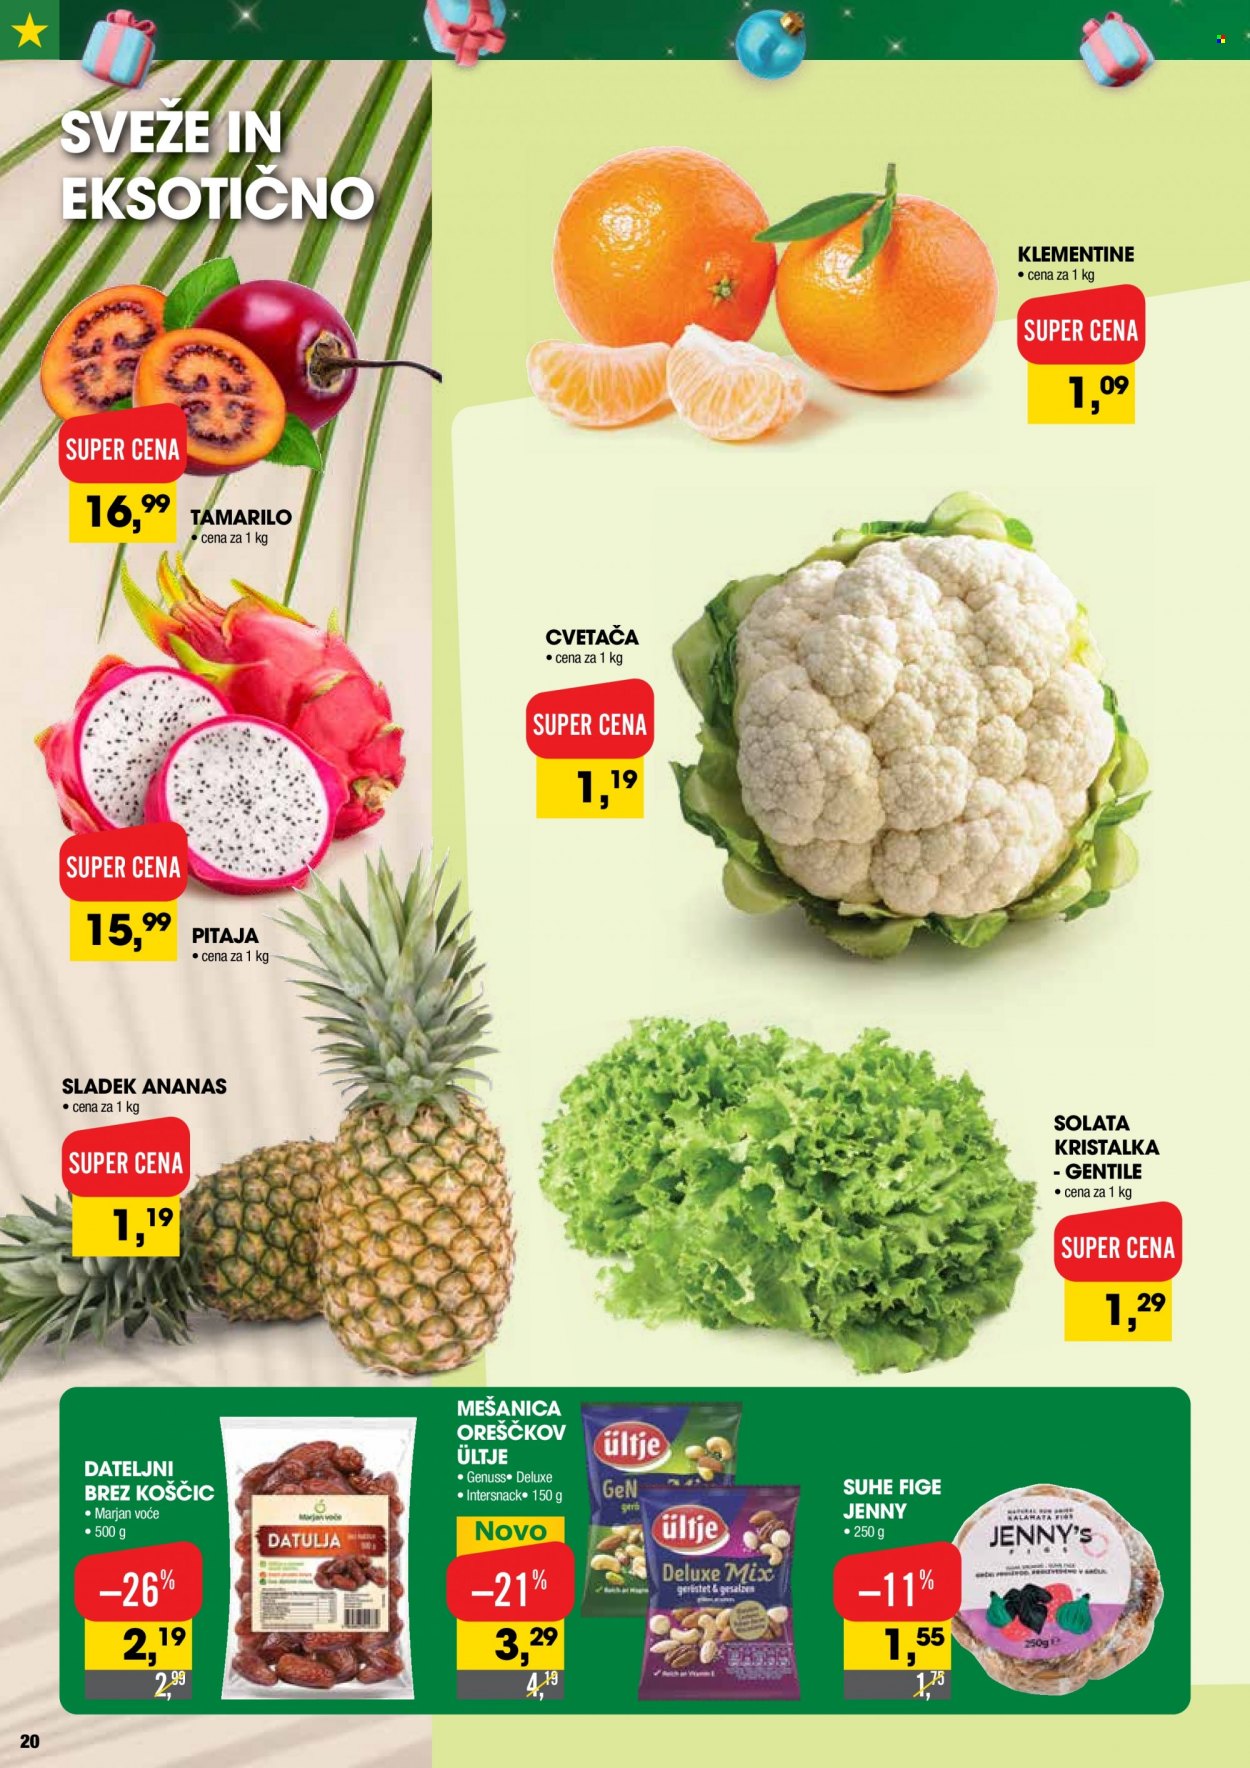 thumbnail - Tuš katalog - 1.12.2021 - 7.12.2021 - Ponudba izdelkov - ananas, fige, solata, dateljni, suhe fige. Stran 20.